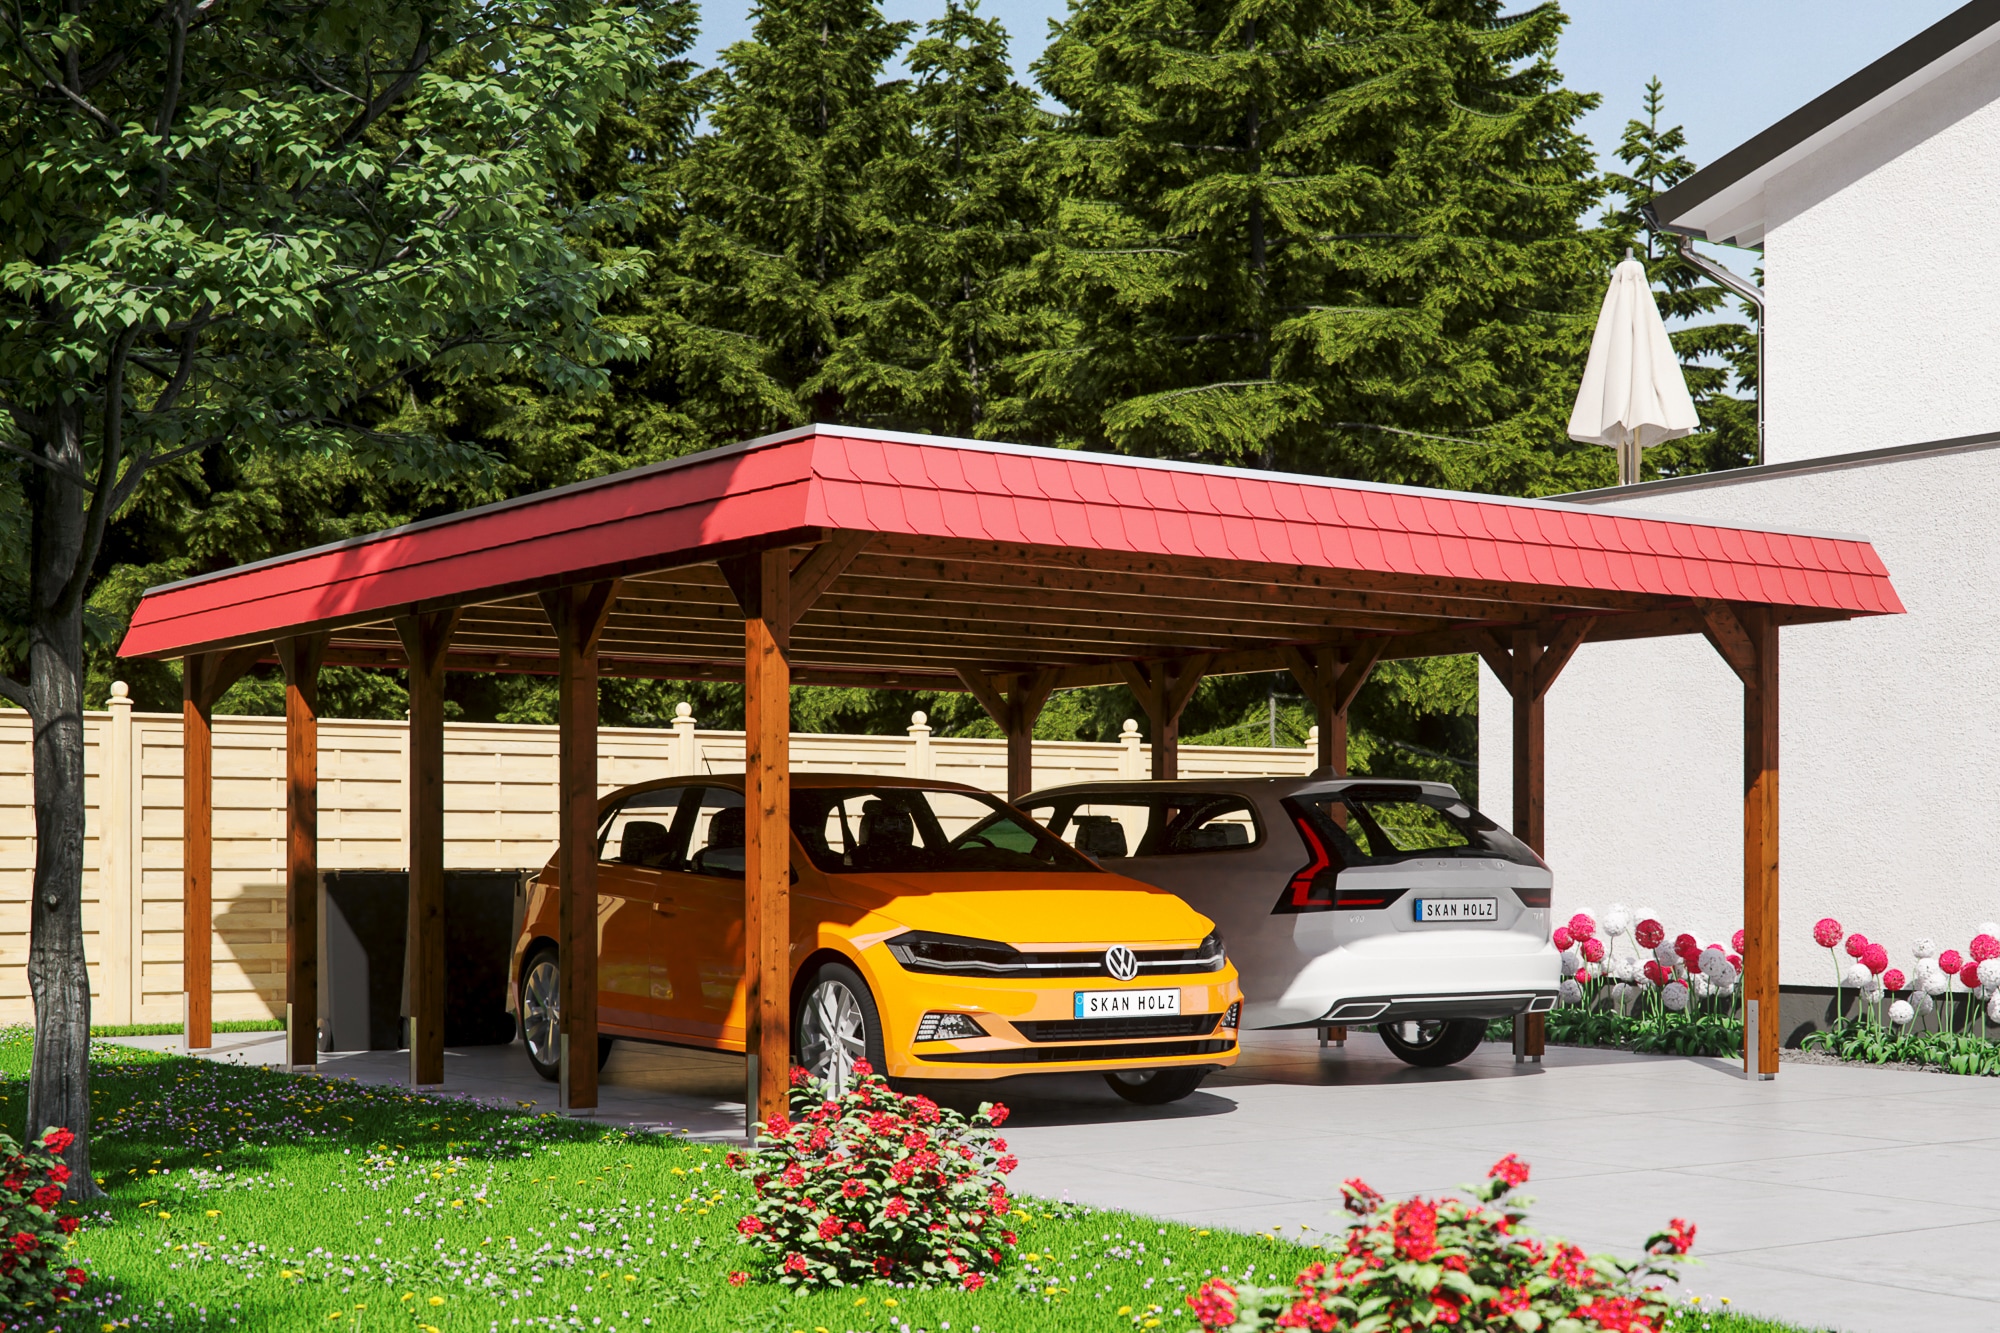 Skanholz Doppelcarport »Spreewald«, Nadelholz, 530 cm, Nussbaum, 585x741cm mit EPDM-Dach, rote Blende